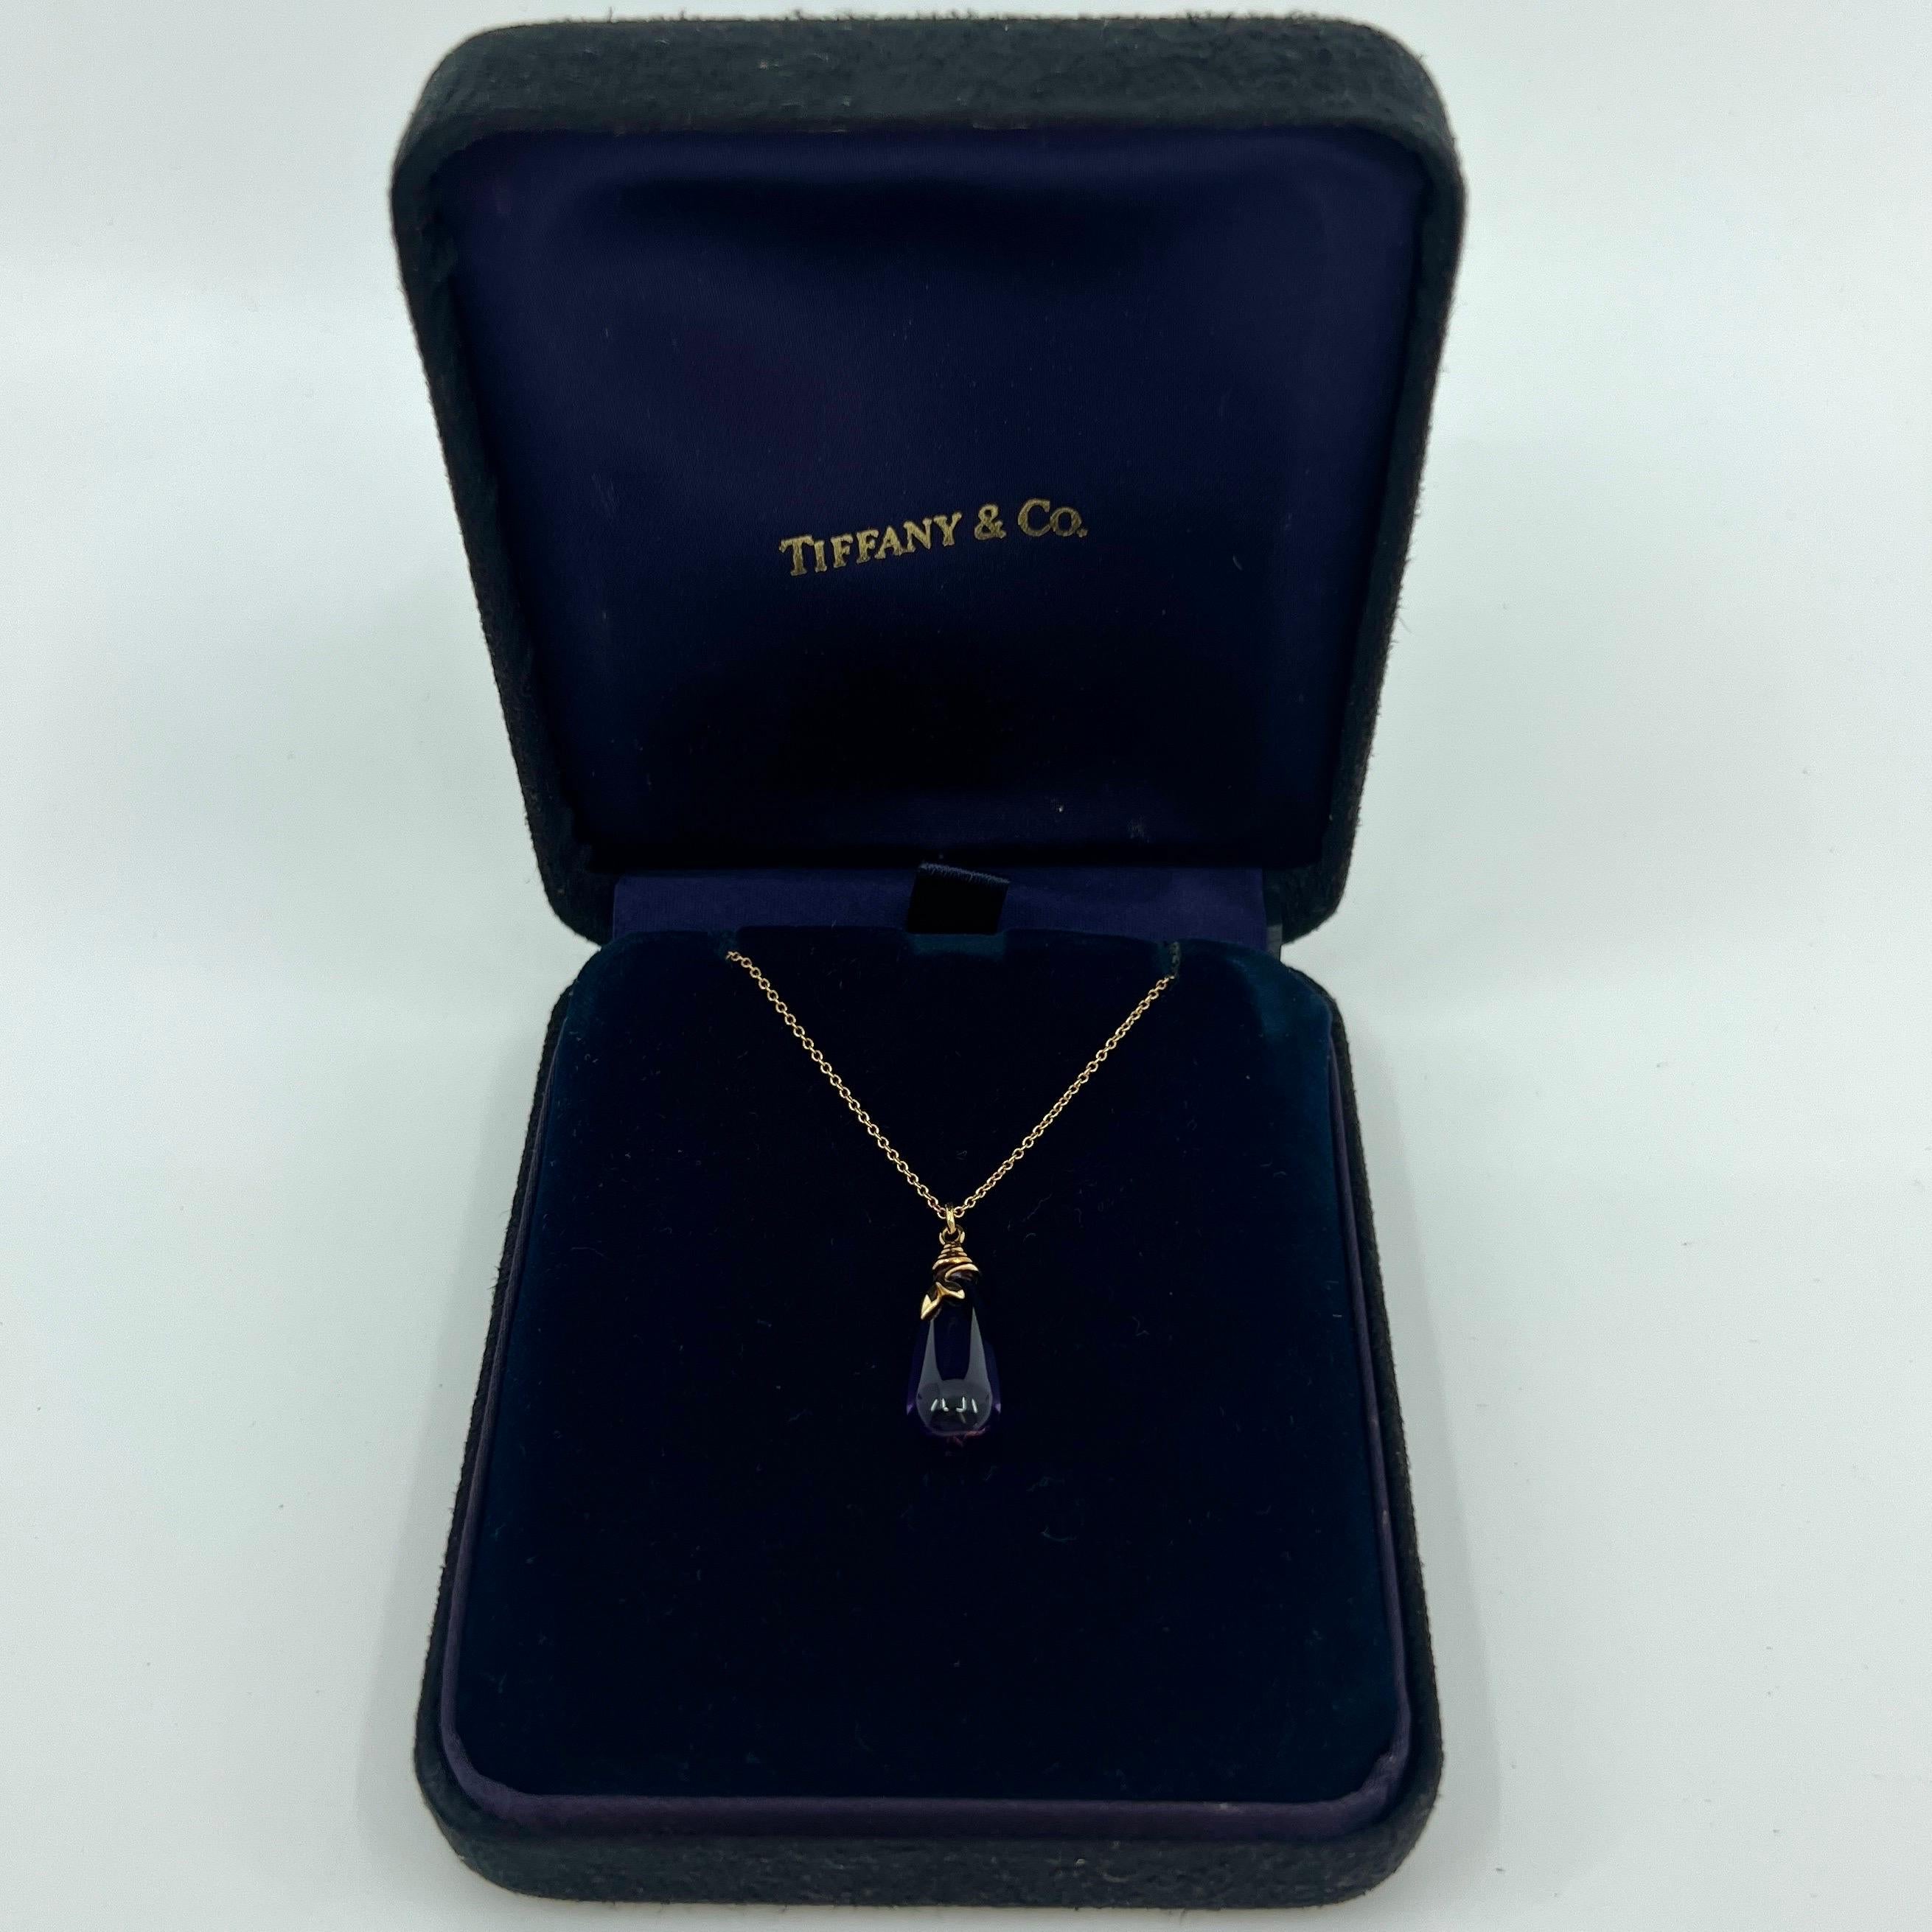 Seltene Tiffany & Co. Paloma Picasso Halskette mit tropfenförmigem Amethyst-Gold-Anhänger in Olivblattform 1